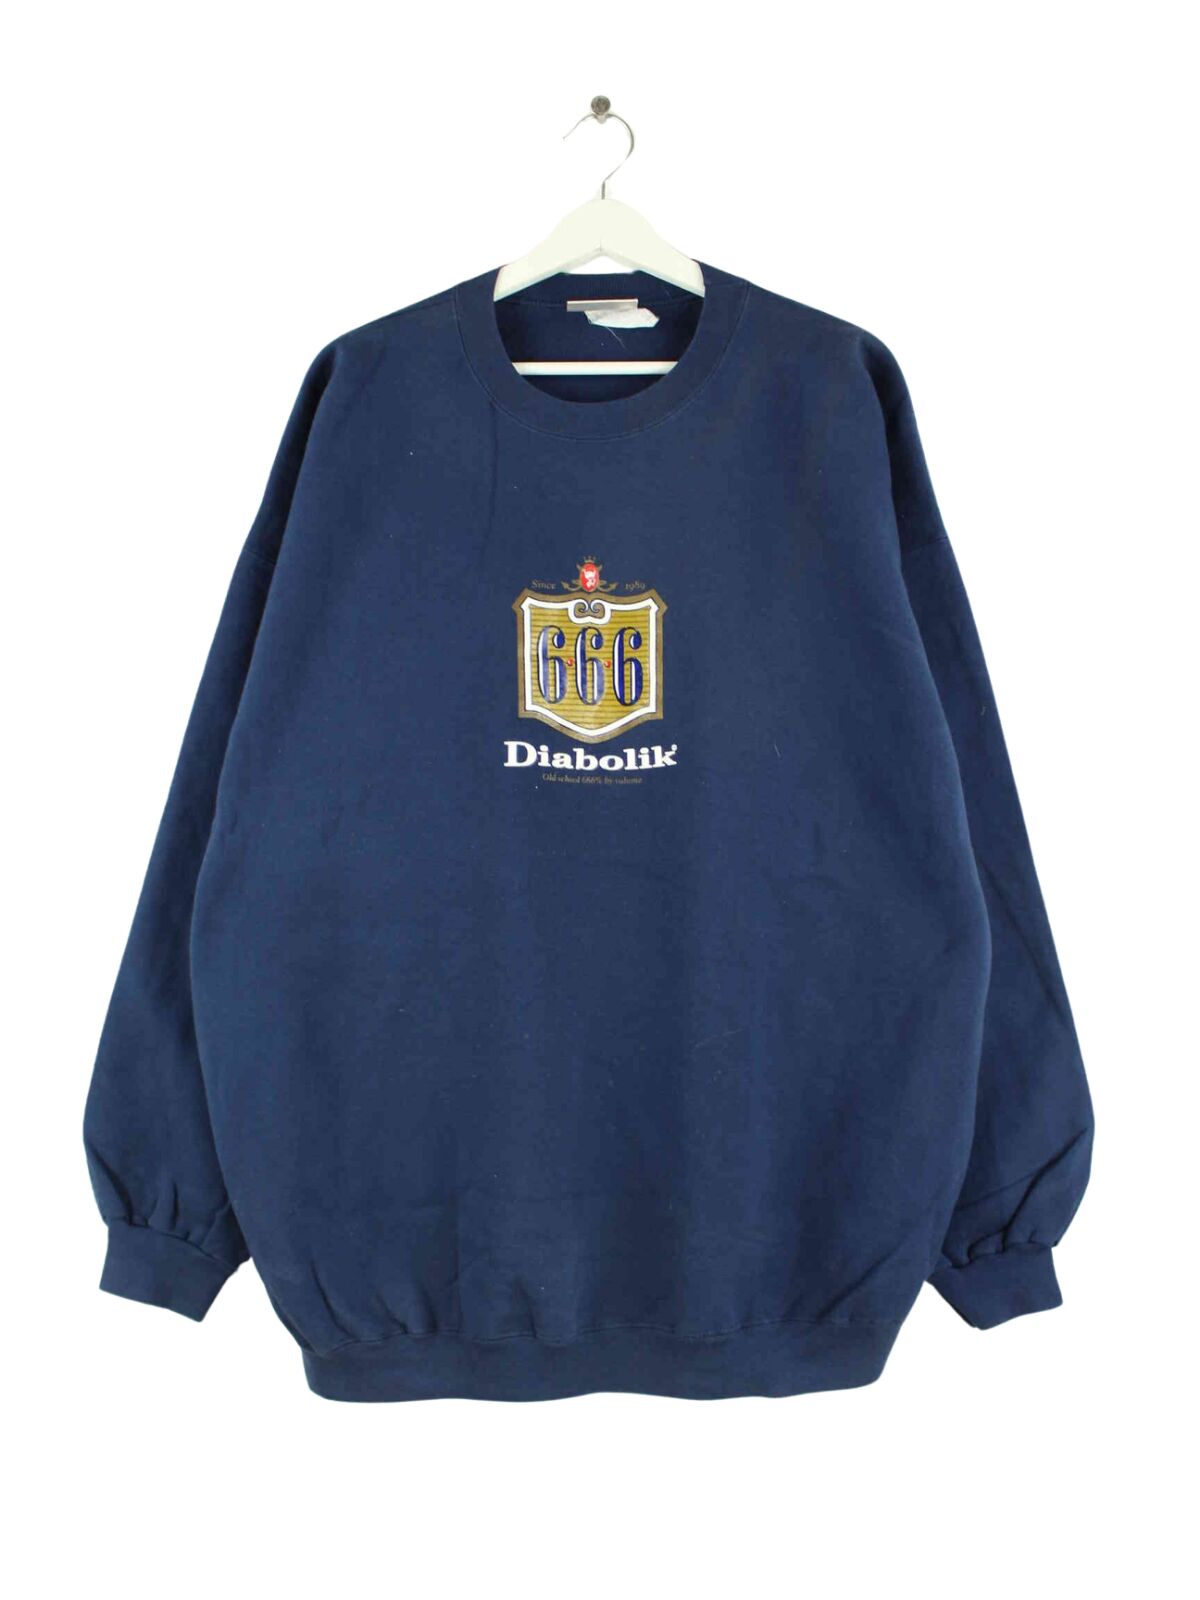 Hanes 90s Vintage Diabolik Print Heavy Sweater Blau XXL (front image)